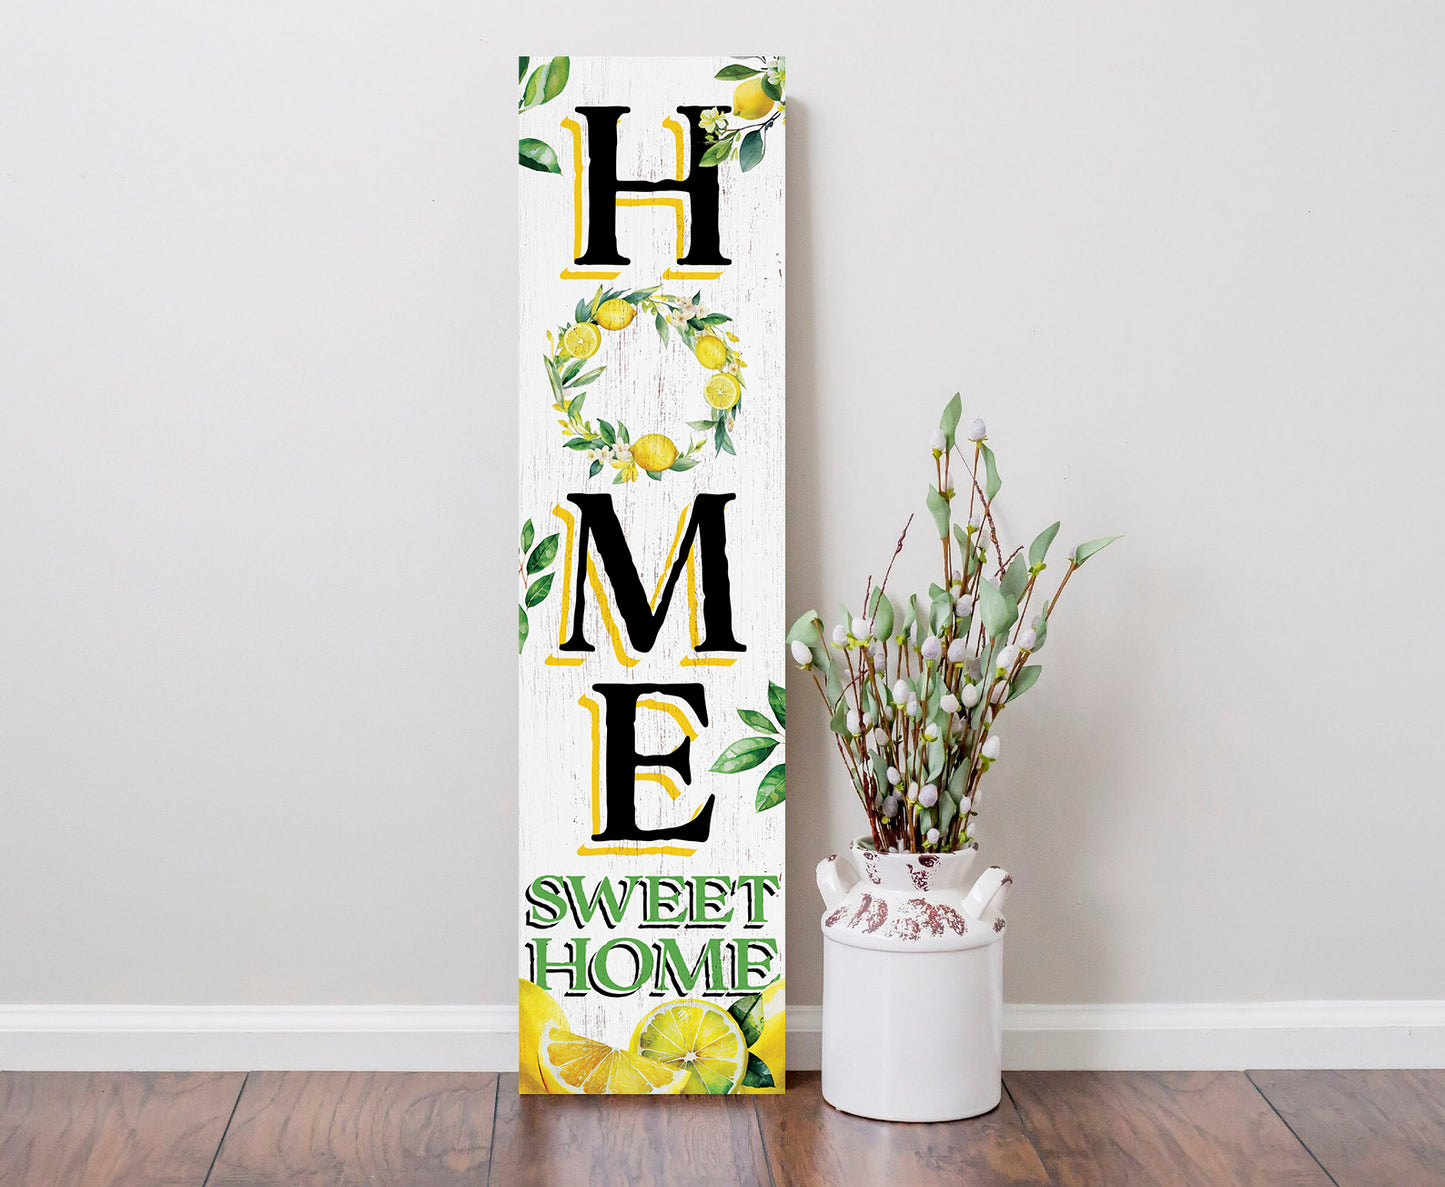 Lemon Home Sweet Home Sign | Rustic Wood Front Door Decor | Farmhouse Porch Sign Decorations | Patio Decor | Wooden Decor